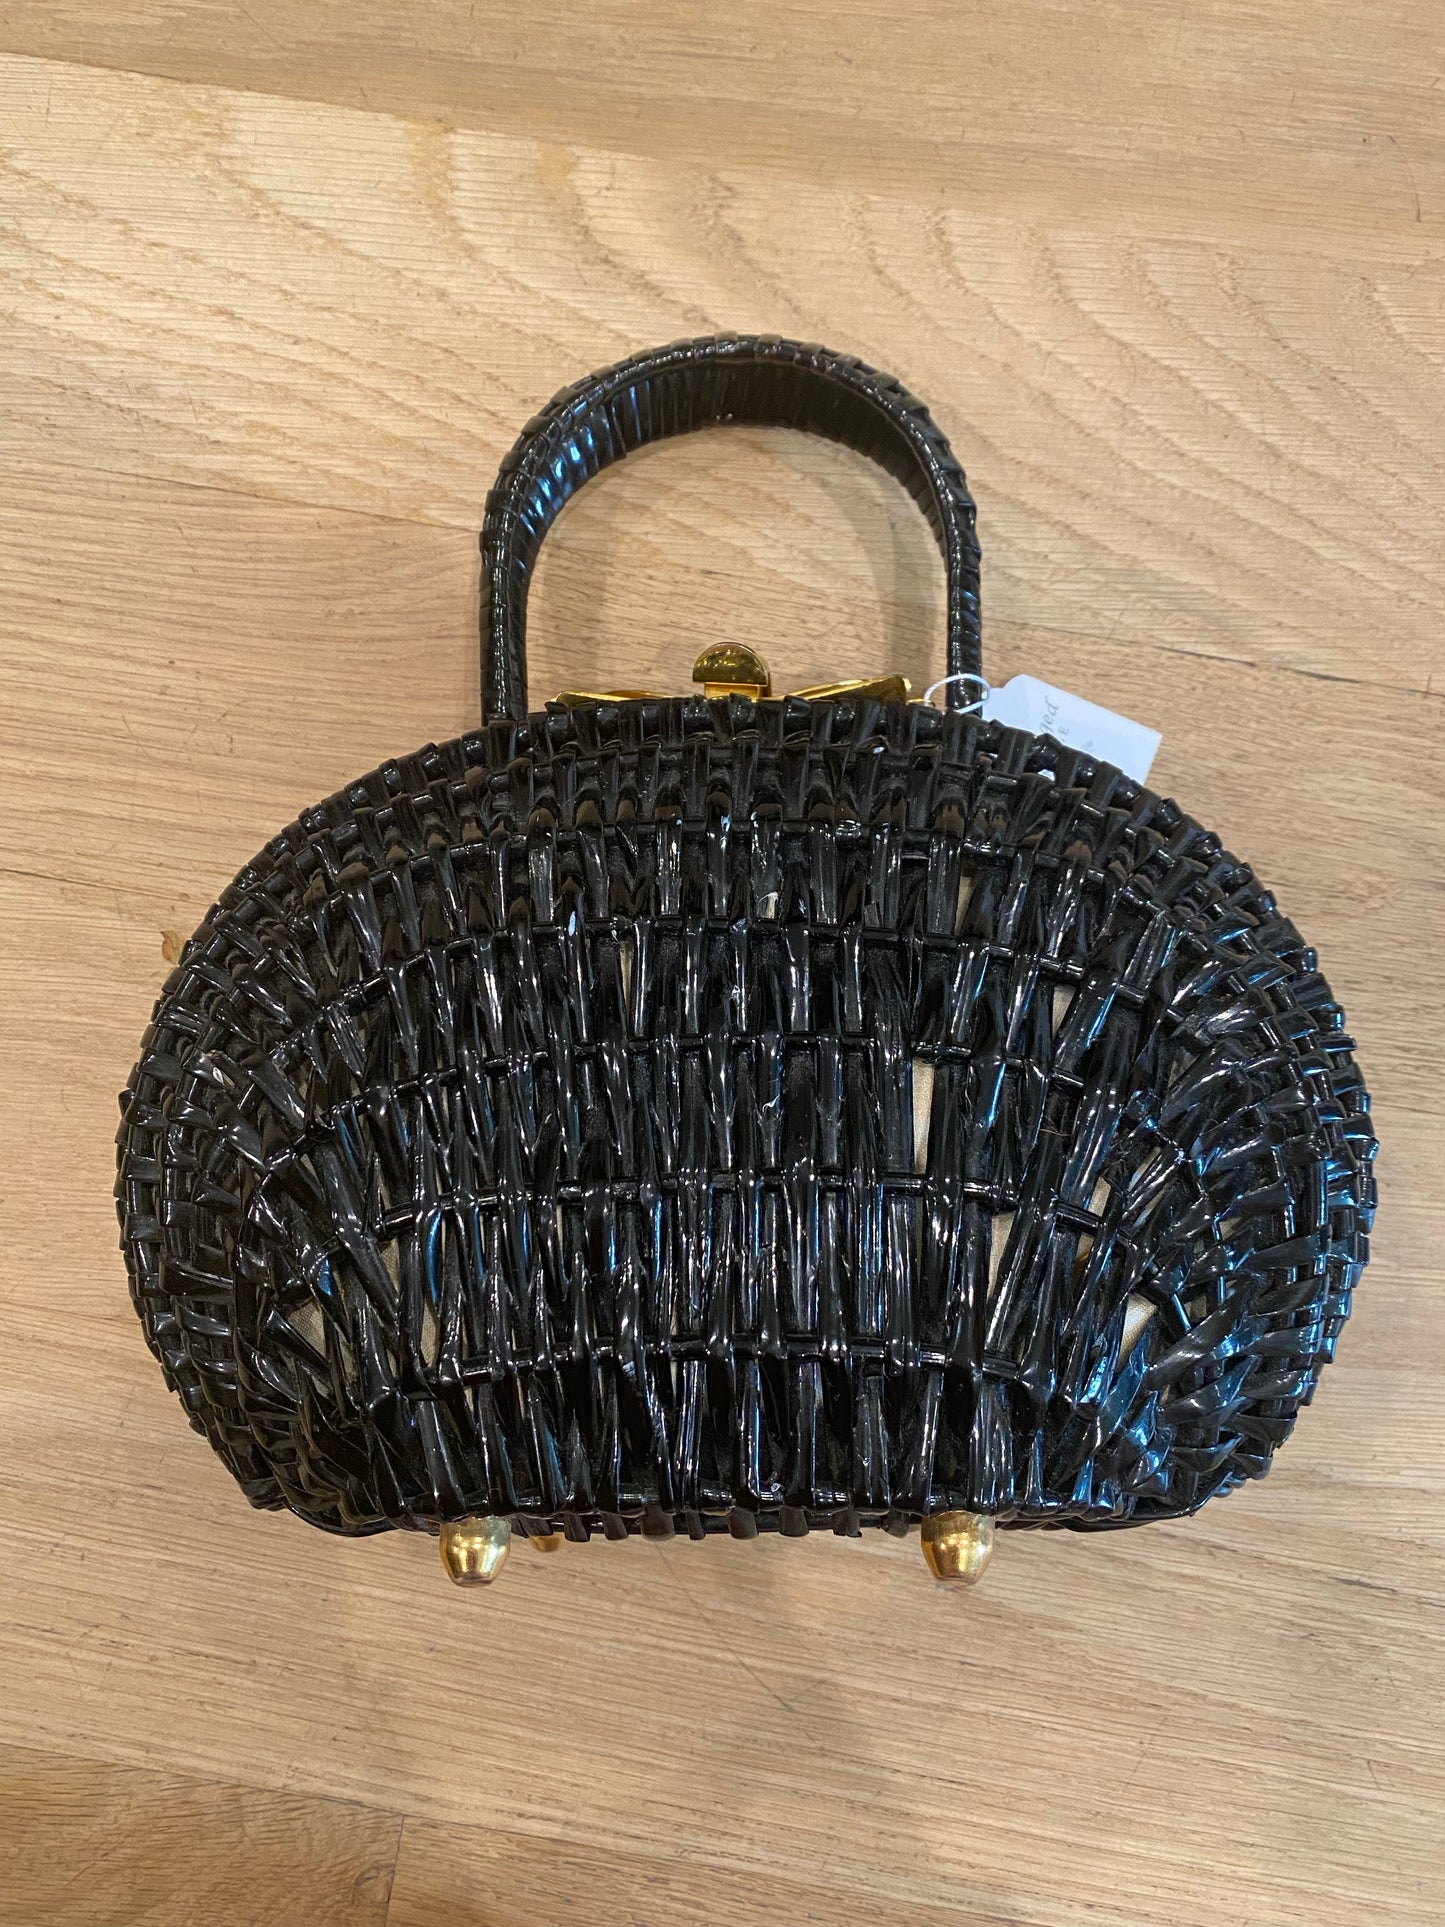 Black Clamshell Wicker Bag, 1960's